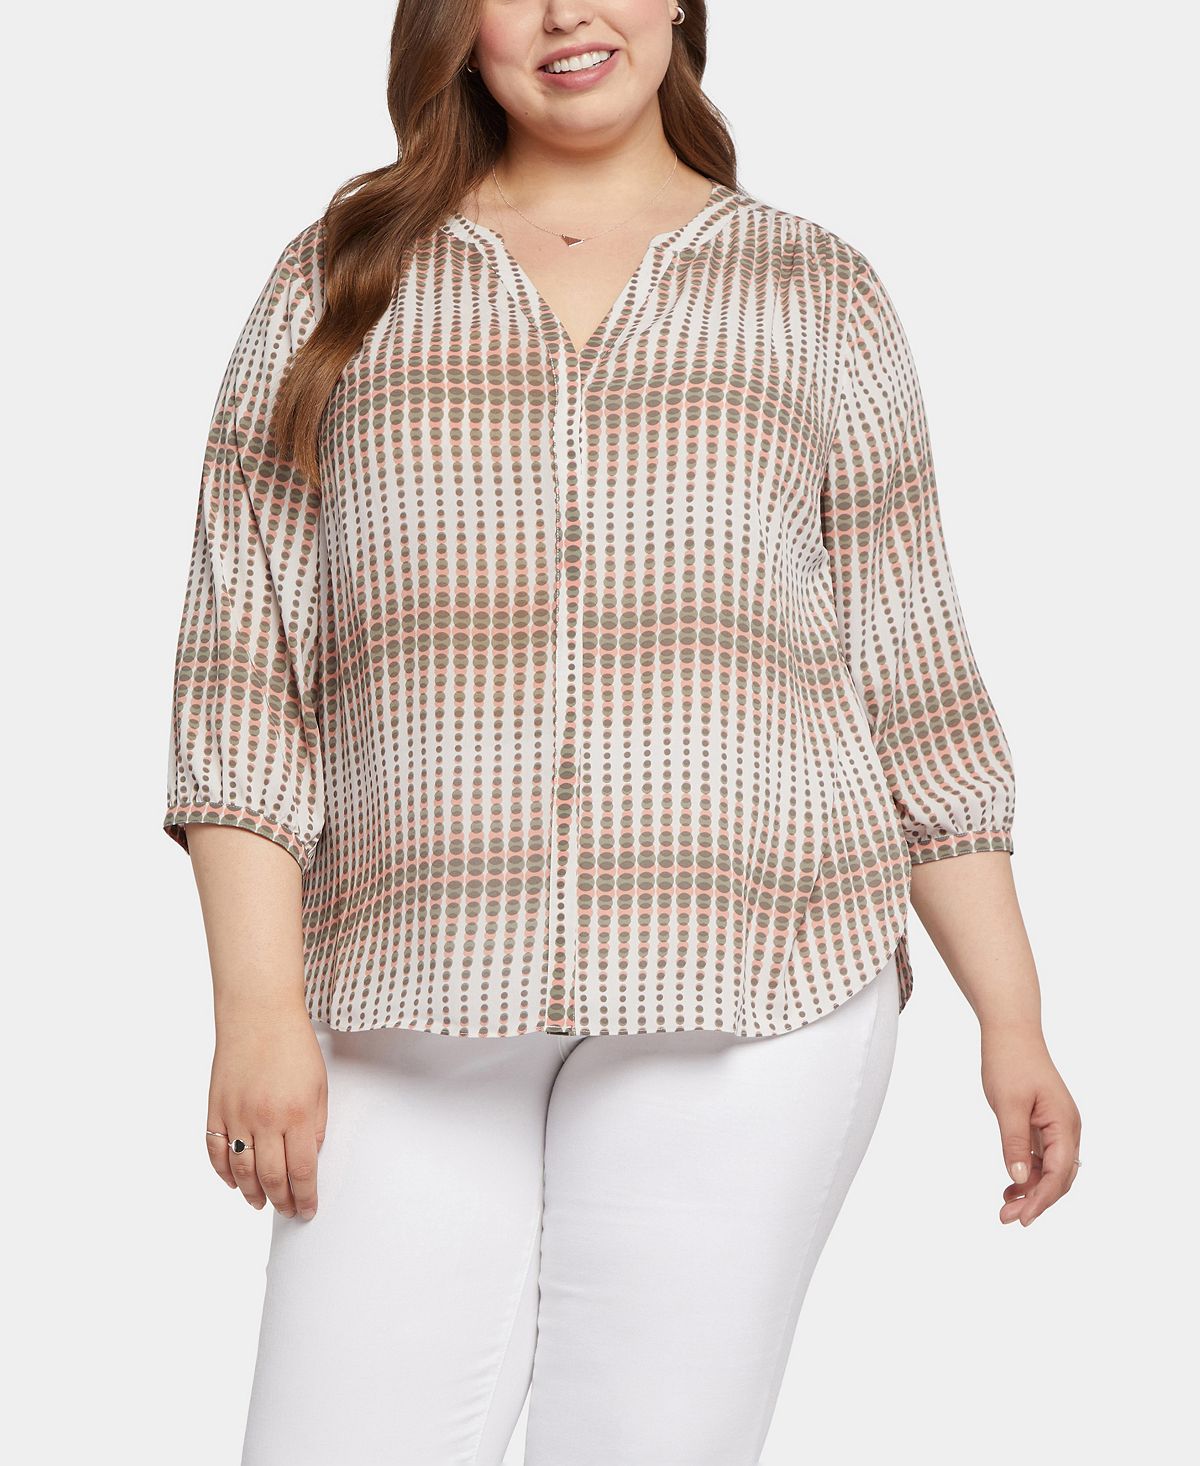 Блузка больших размеров с защипами NYDJ блузка без рукавов больших размеров с подвернутой булавкой nydj цвет ramona dots